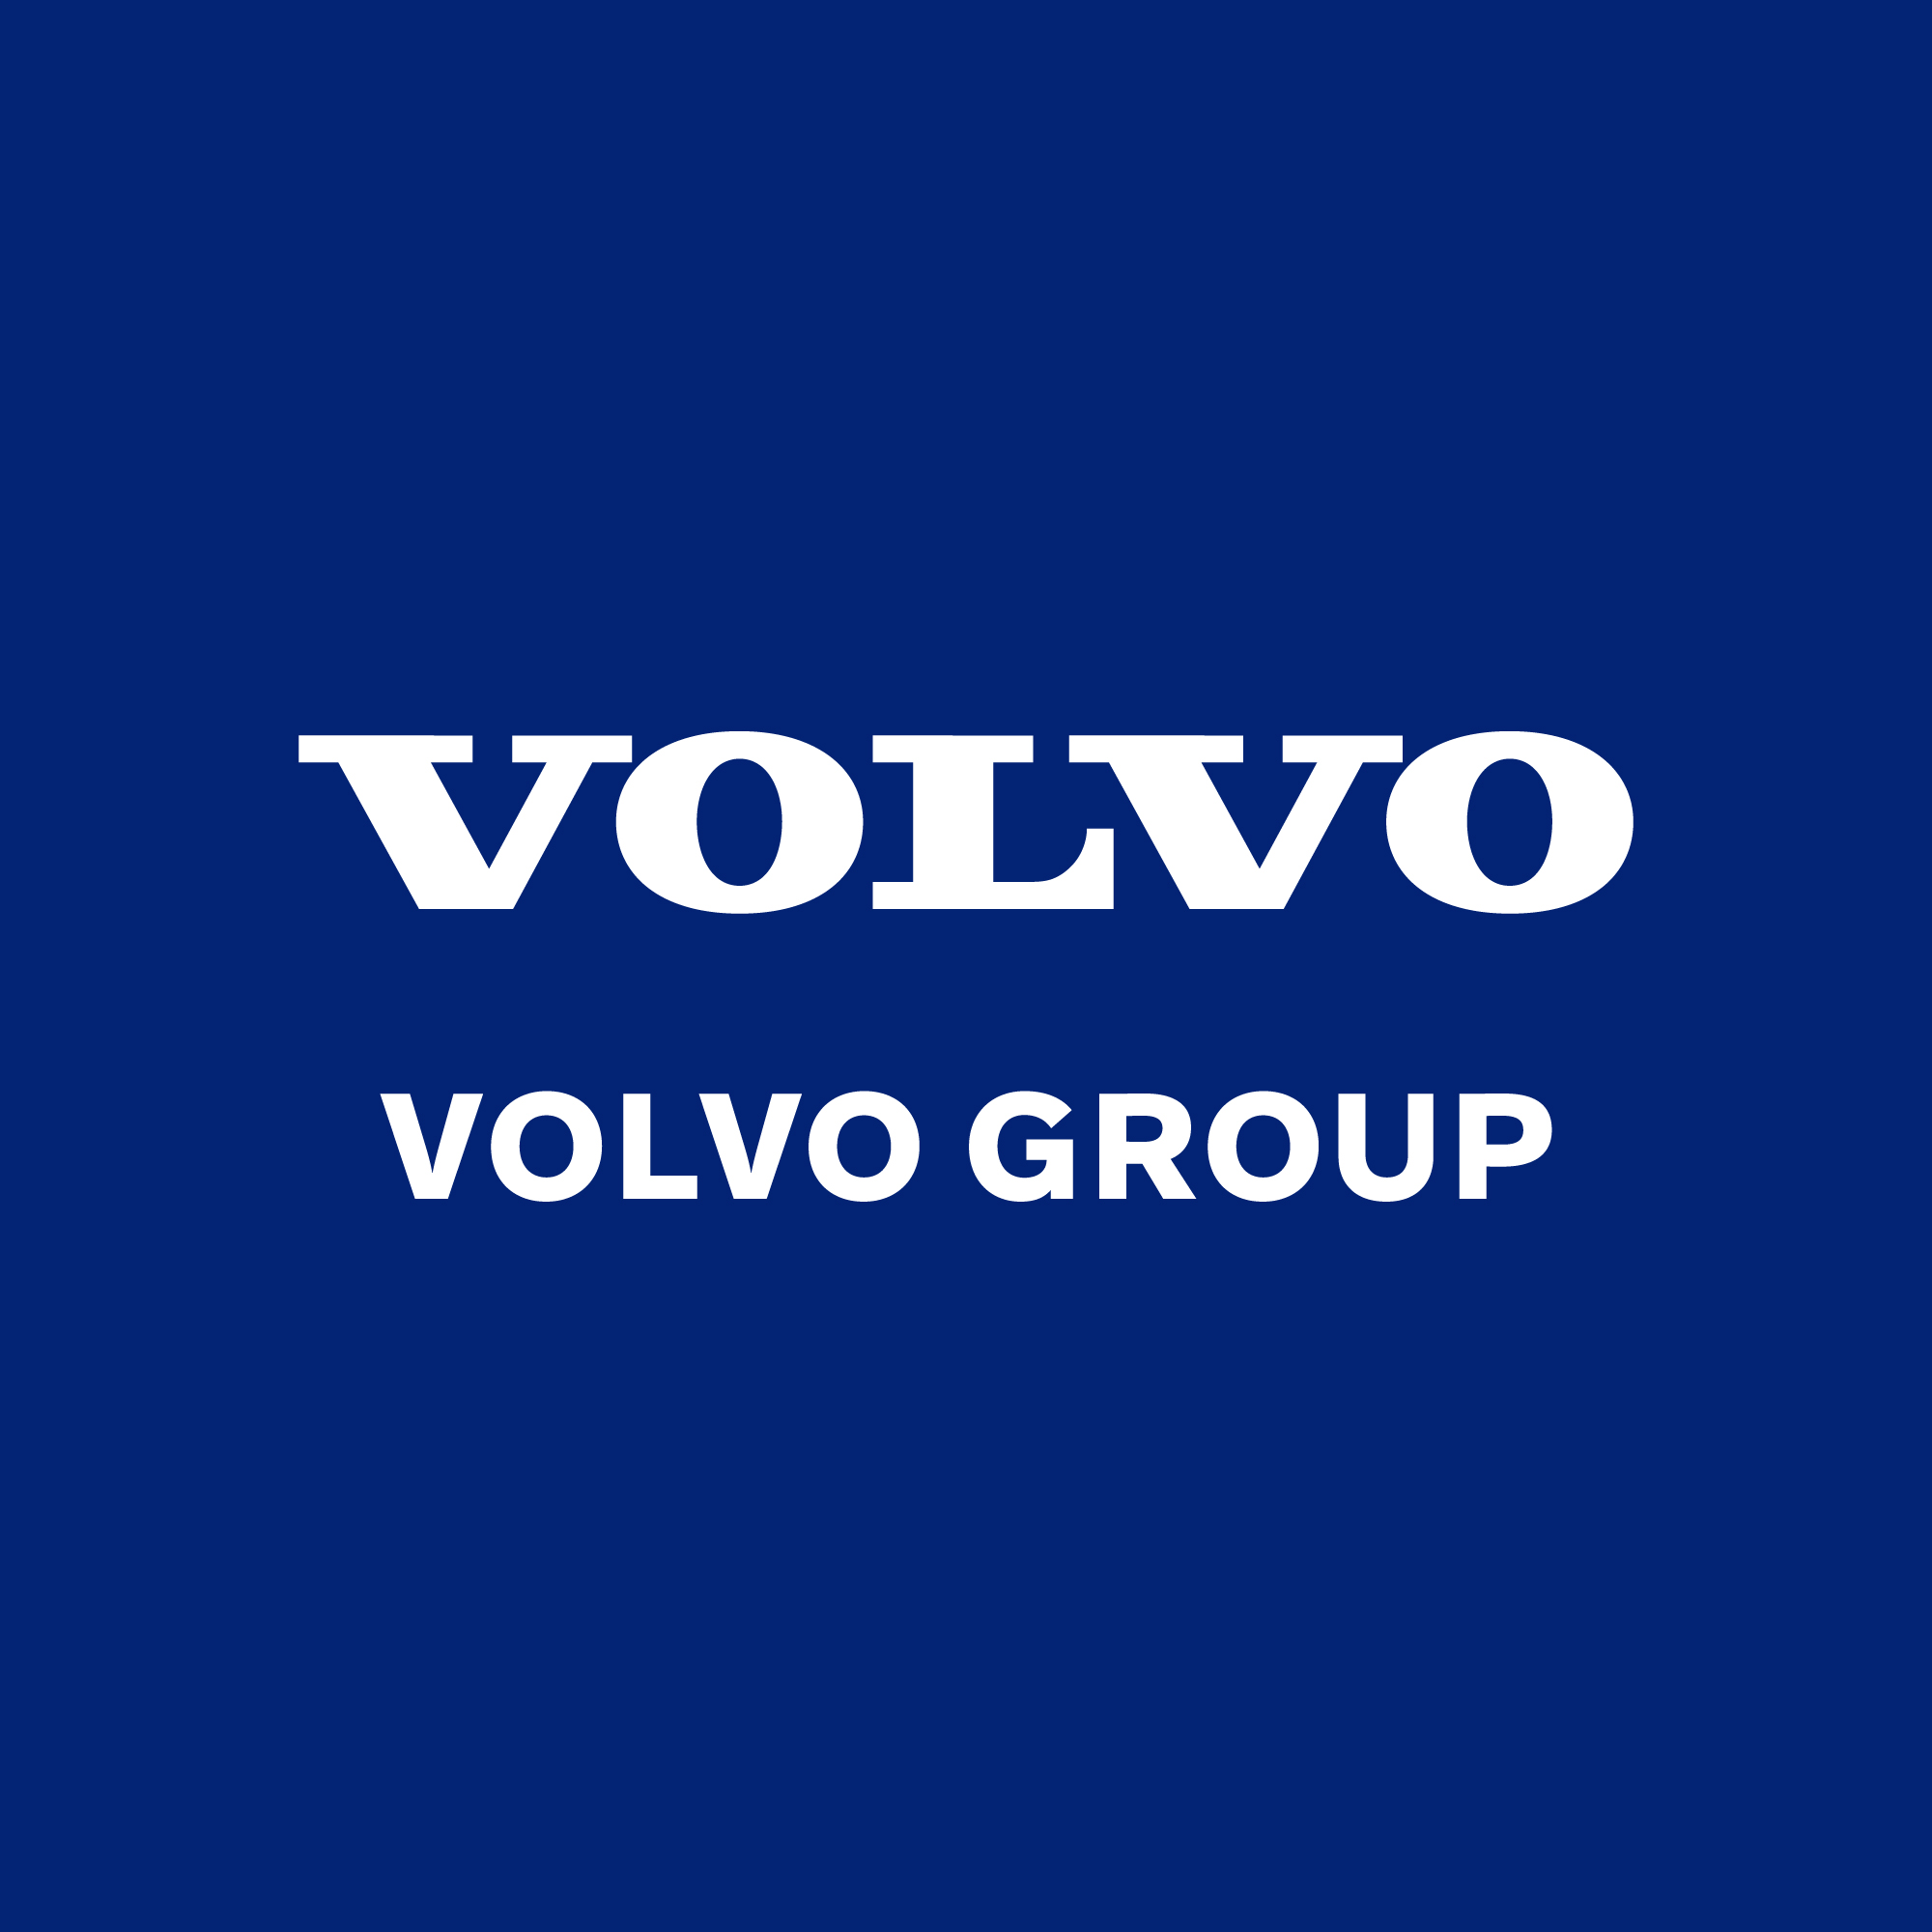 The Volvo Group Company Logo